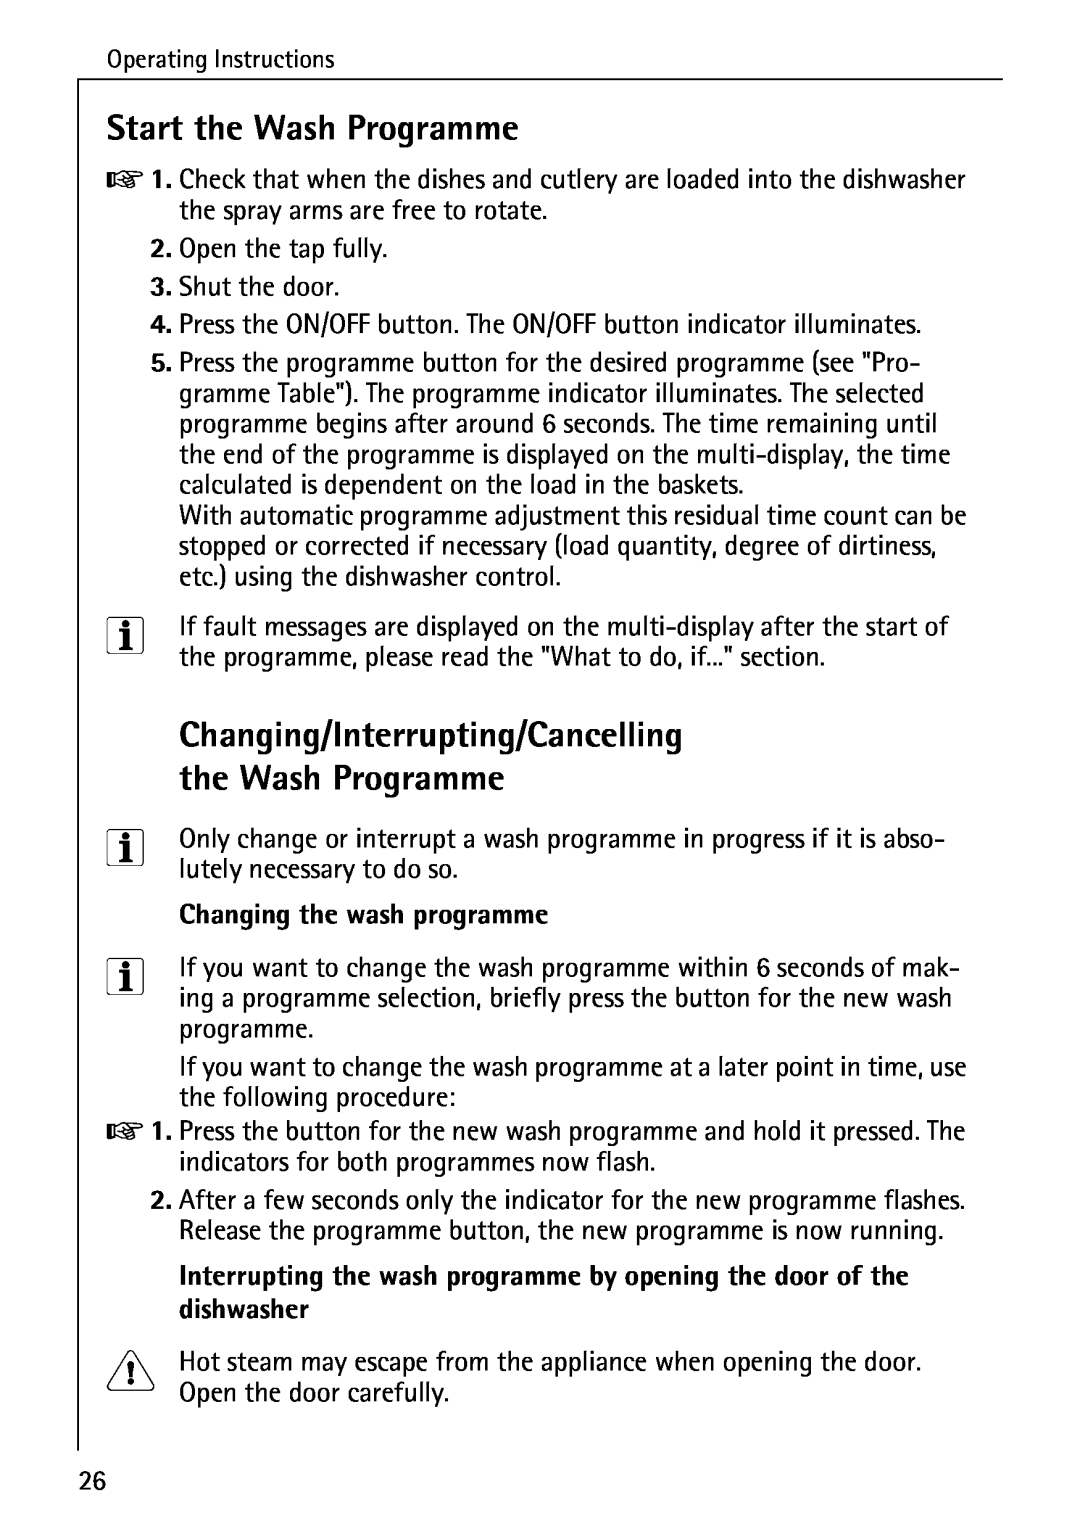 AEG 50760 I manual Start the Wash Programme, Changing/Interrupting/Cancelling, Changing the wash programme 